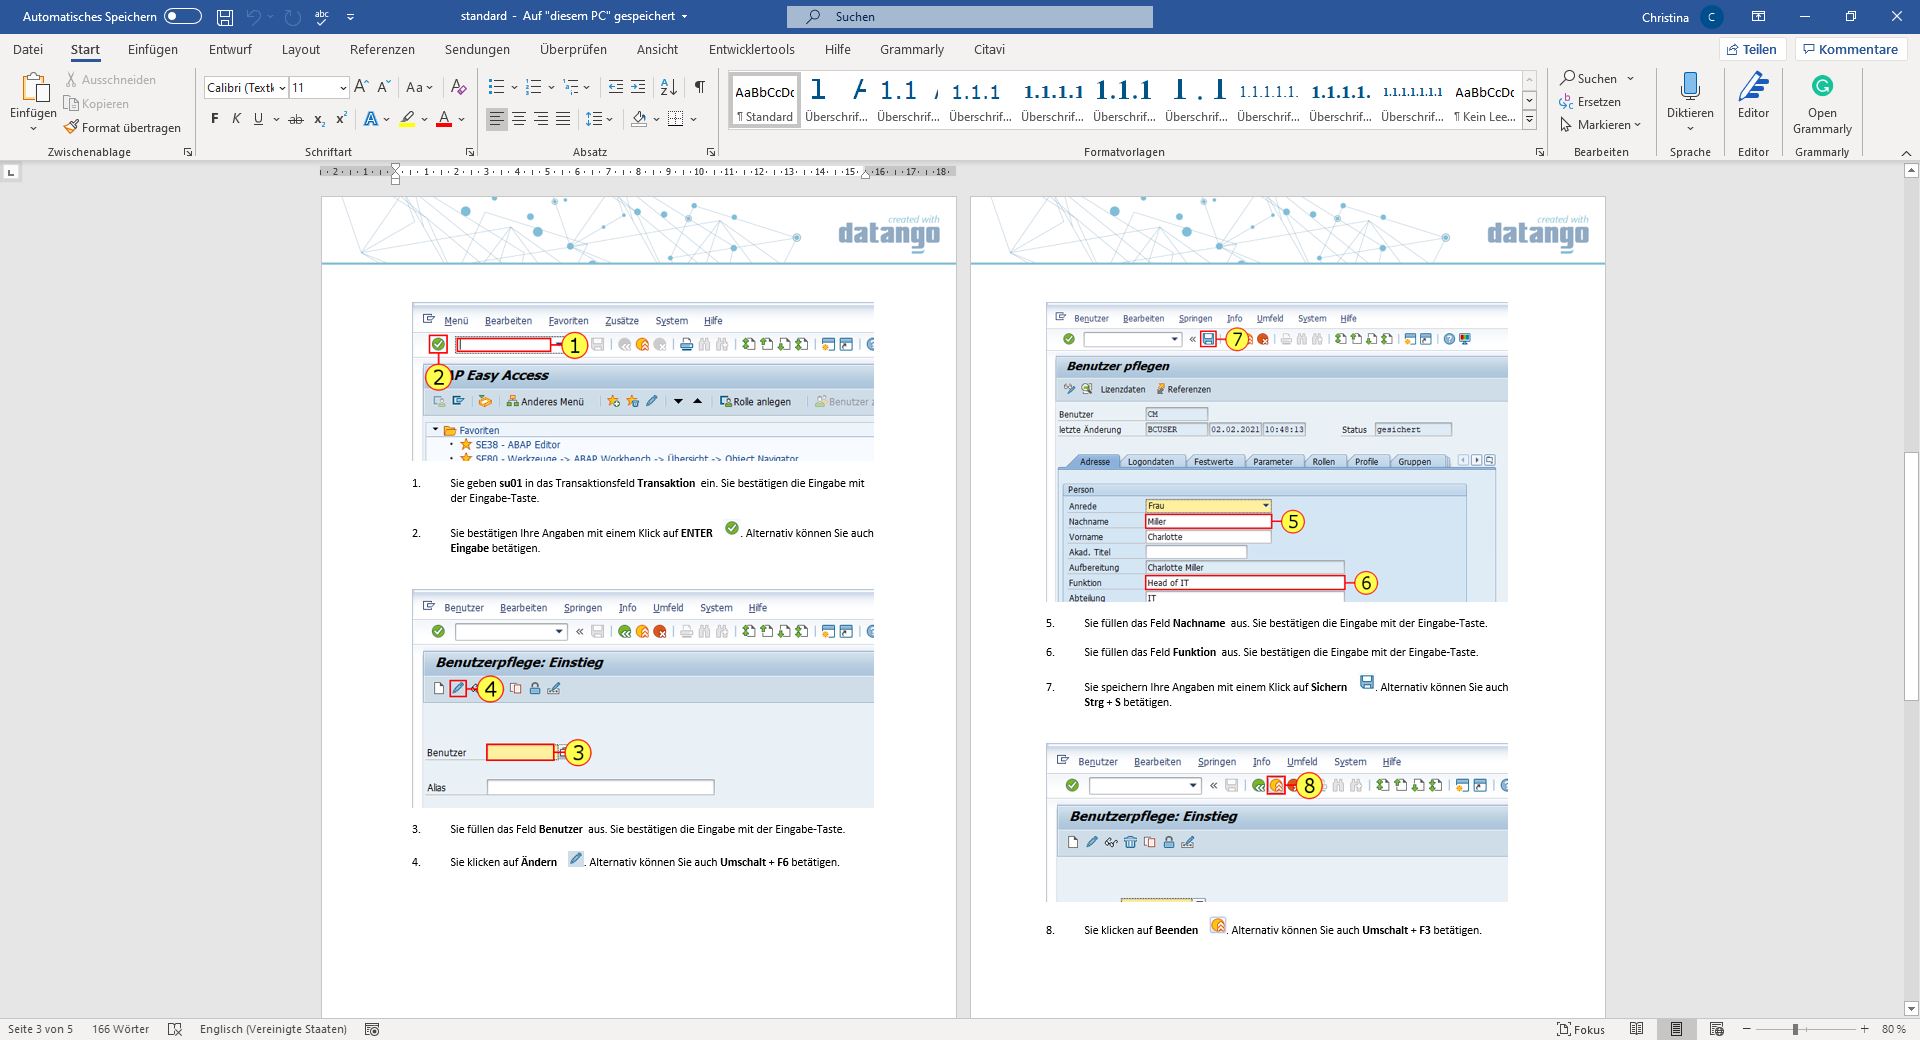 datango creator - automatically generated SAP documentation